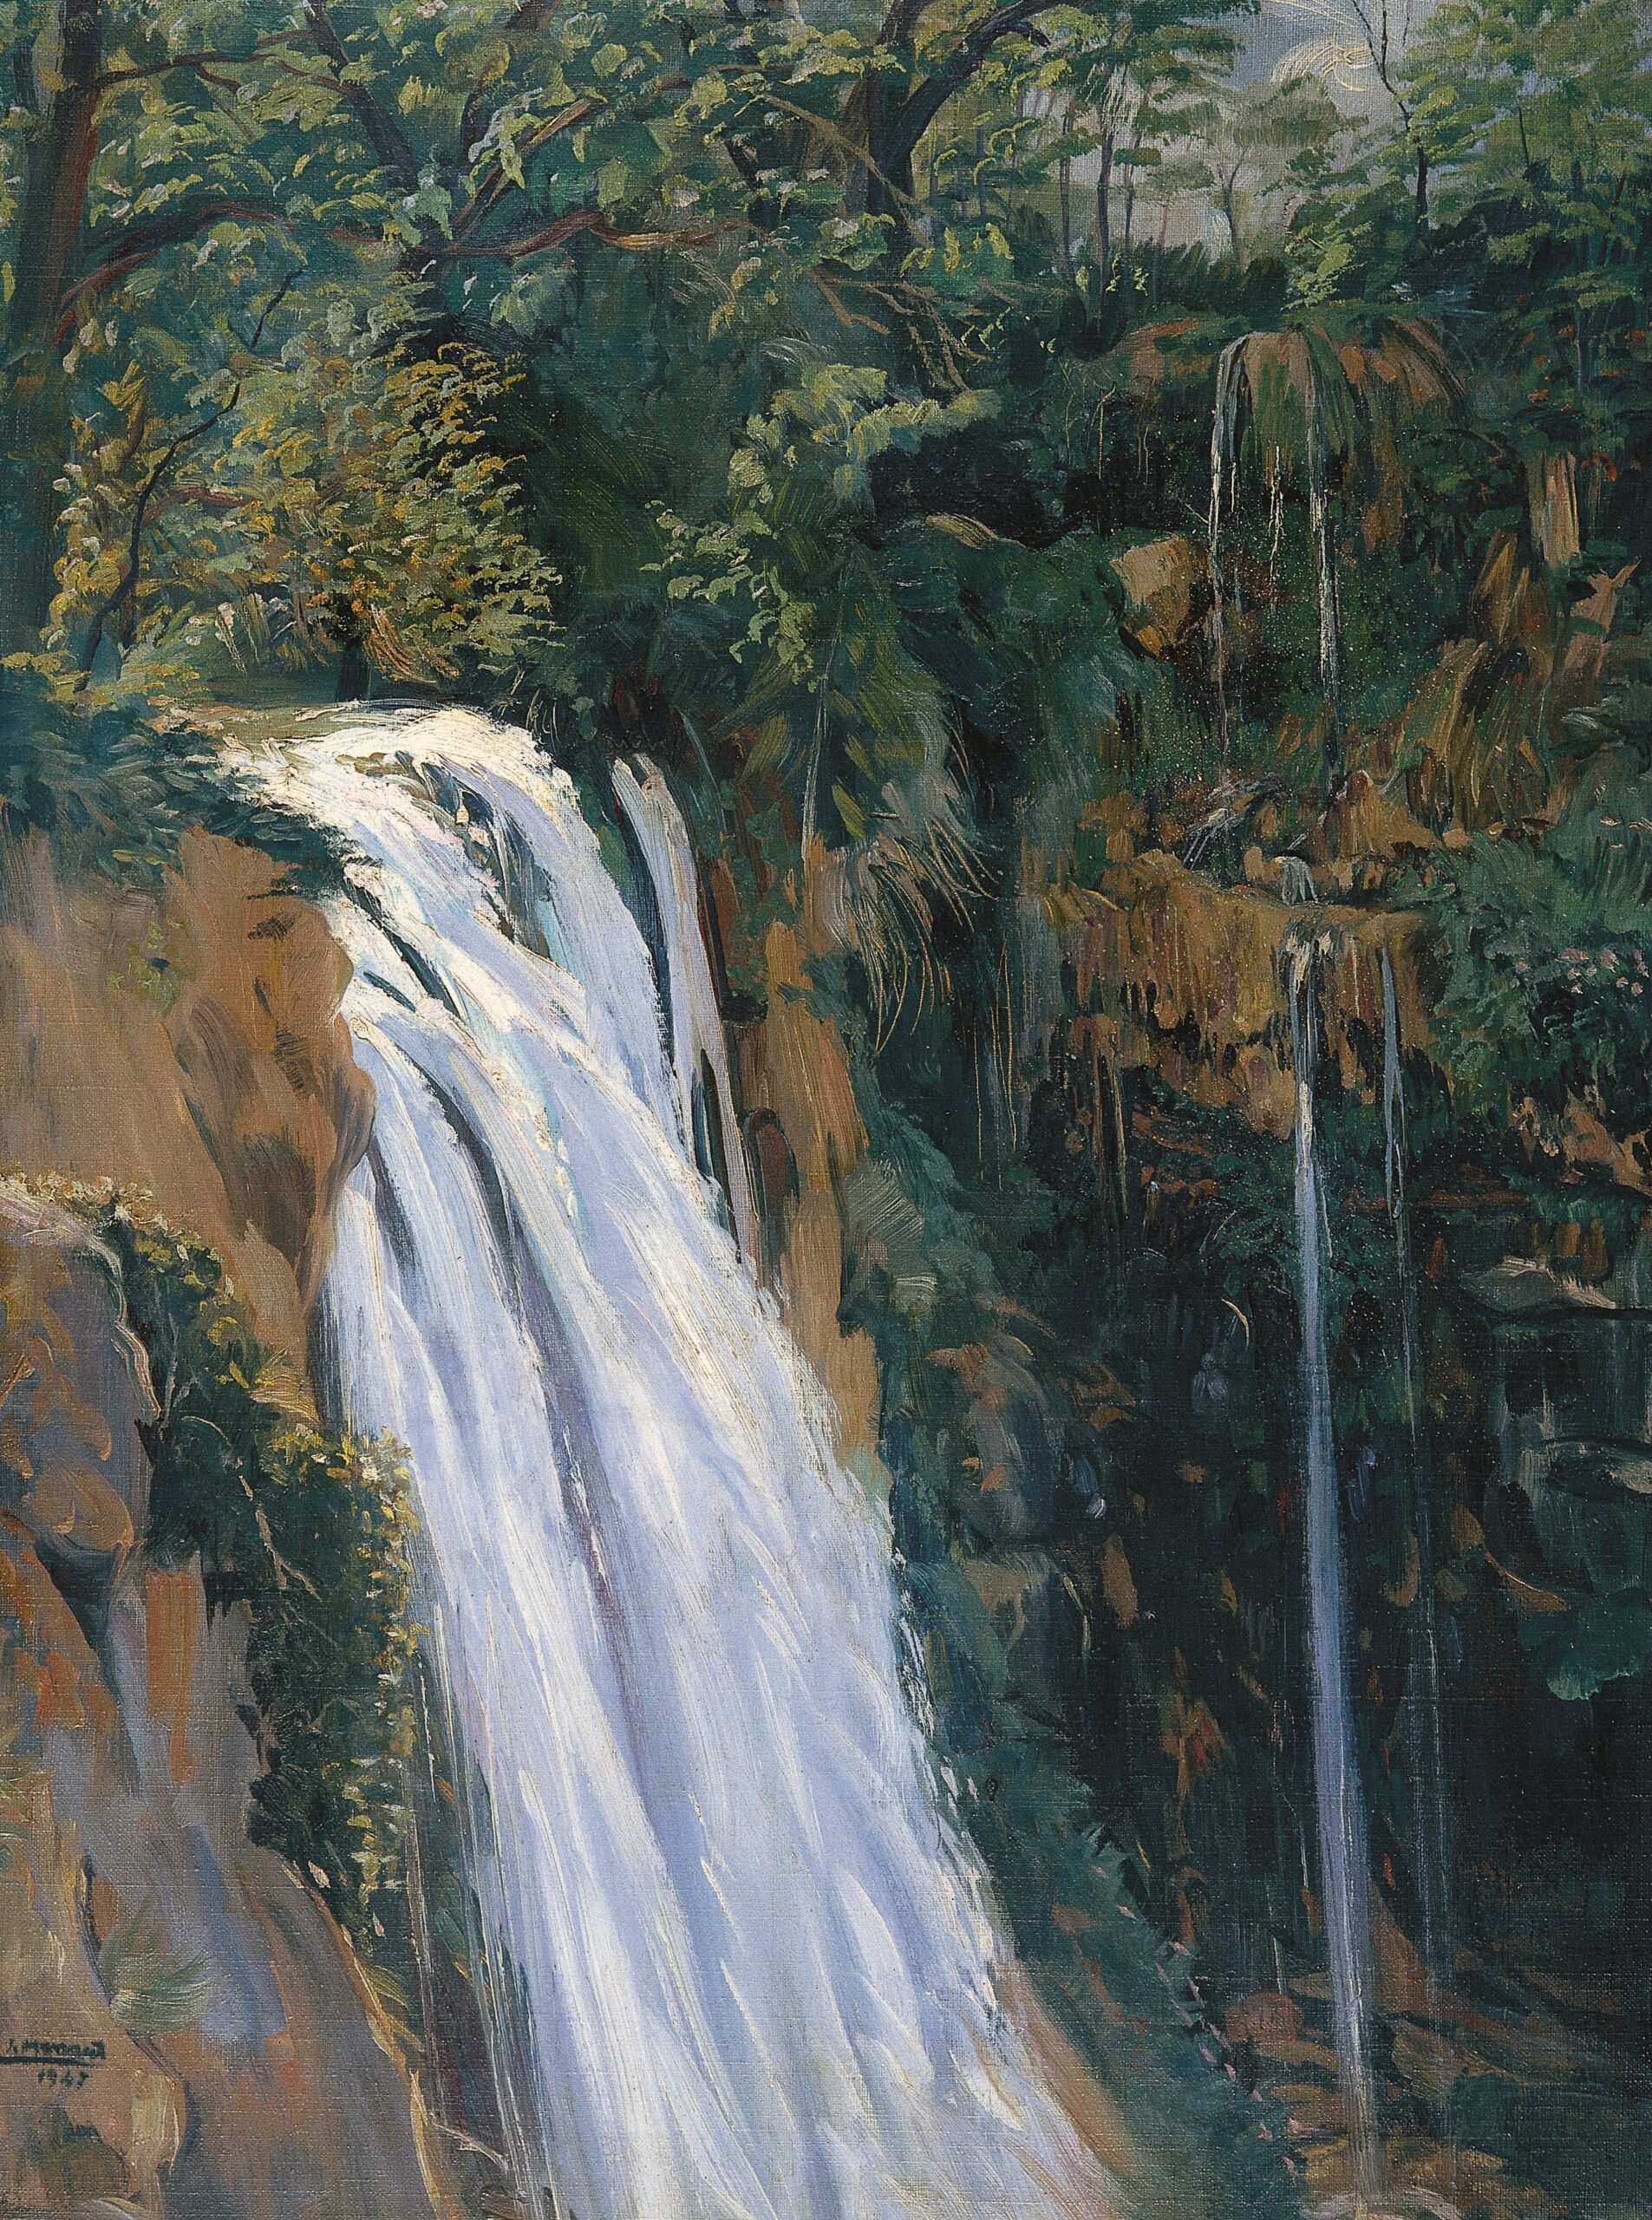 Pintura de José Manaut titulada Cascada, 1947. Óleo sobre lienzo.